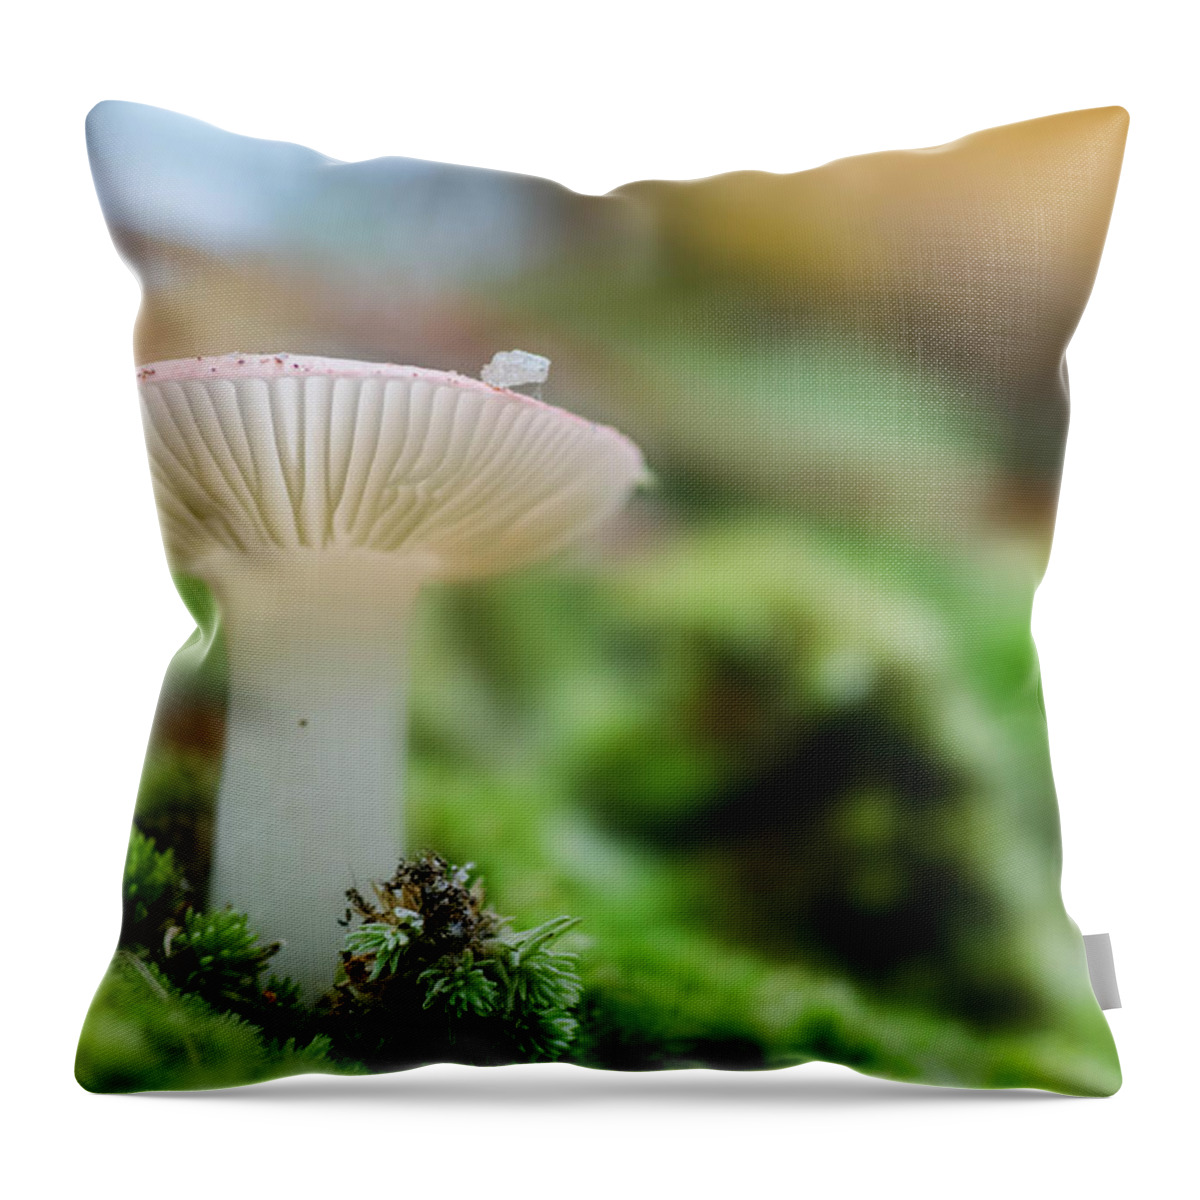 Mushroom Throw Pillow featuring the photograph Mushroom 5 by Beth Venner